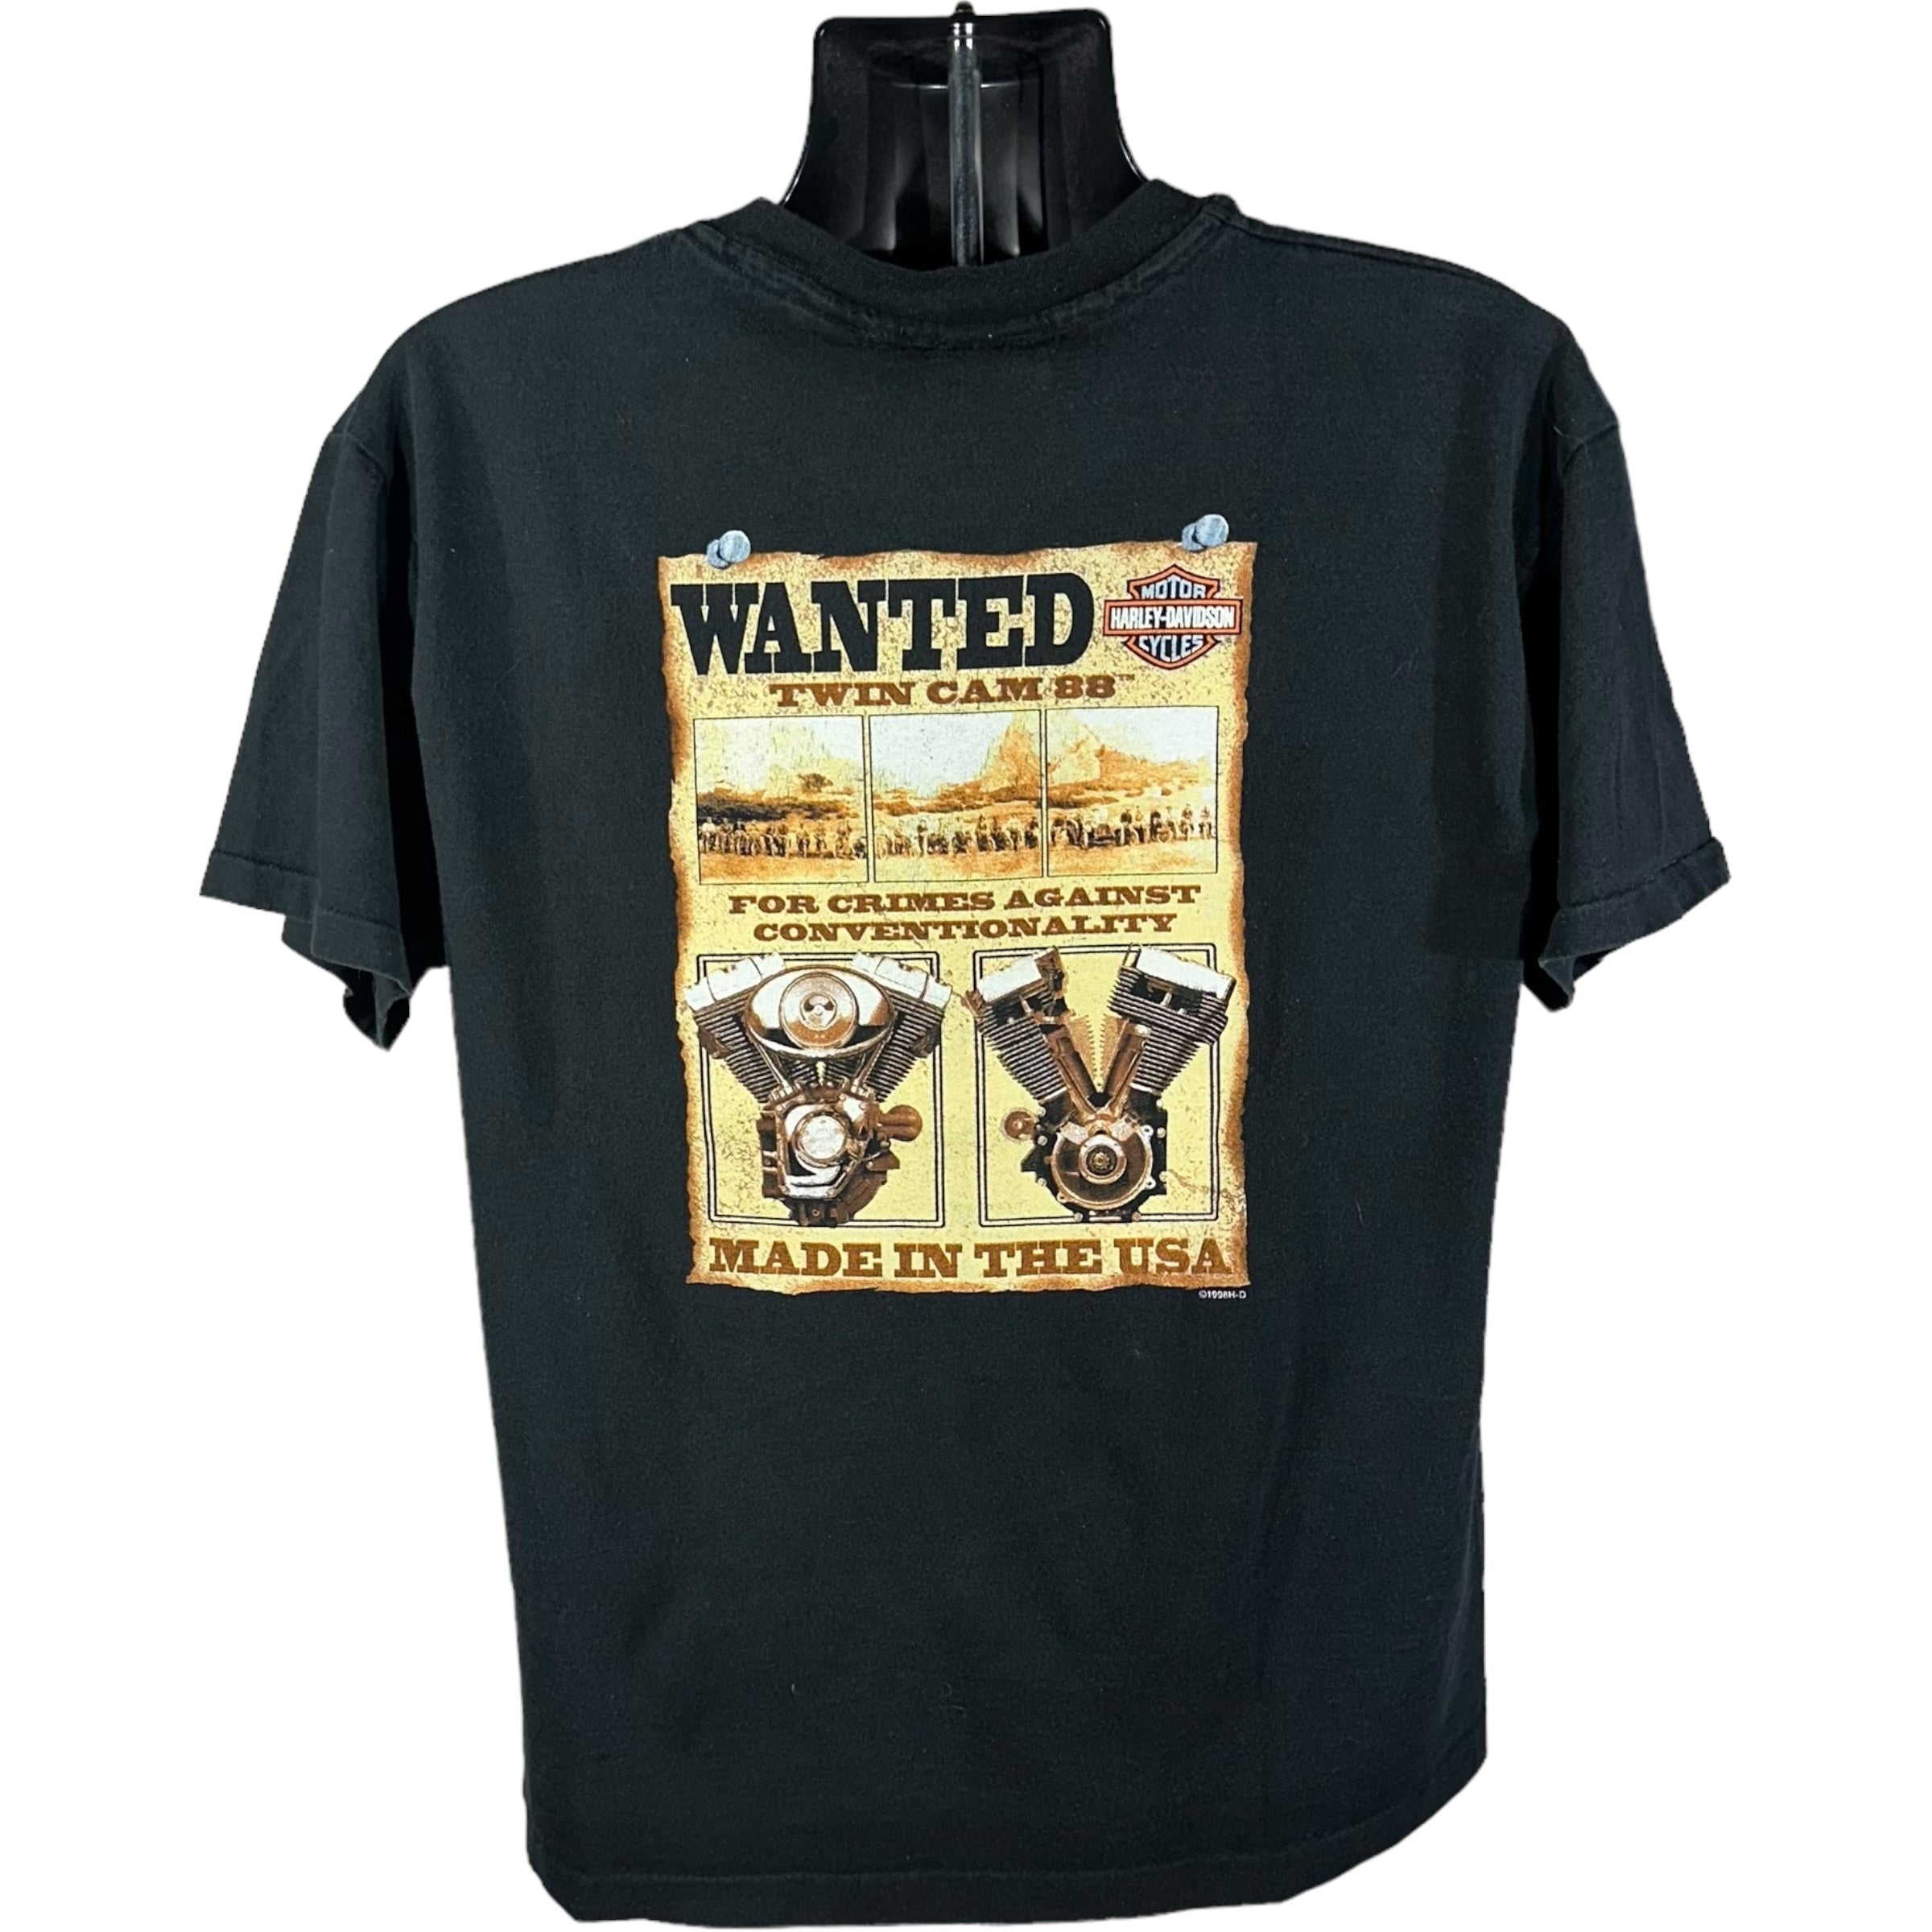 Vintage Harley Davidson "Wanted" Tee